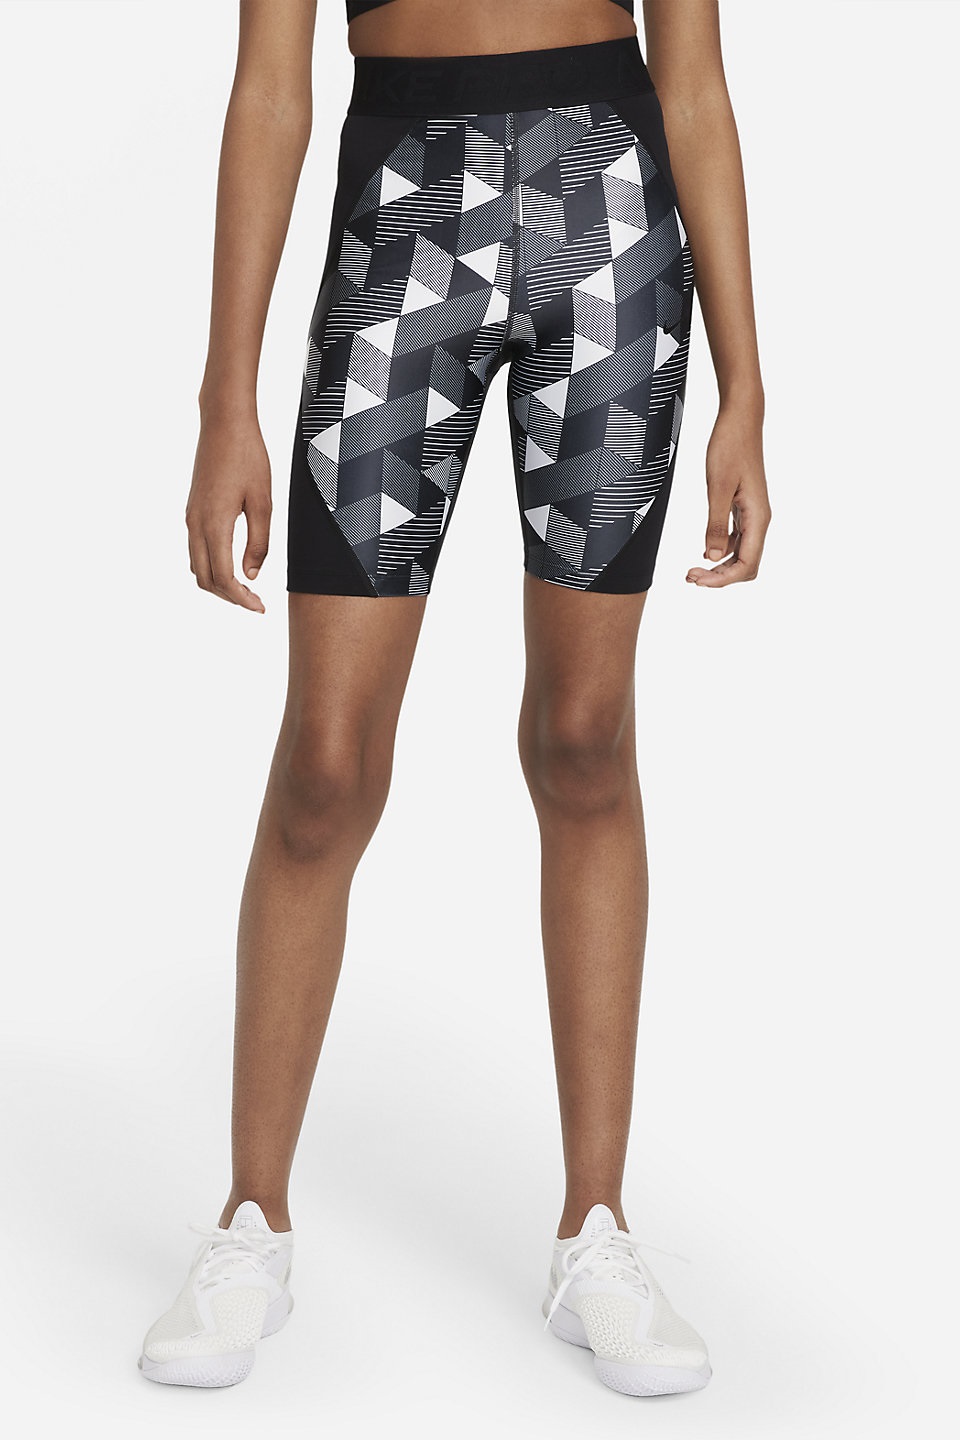 NIKE - Nike Serena Design Crew Şort Siyah